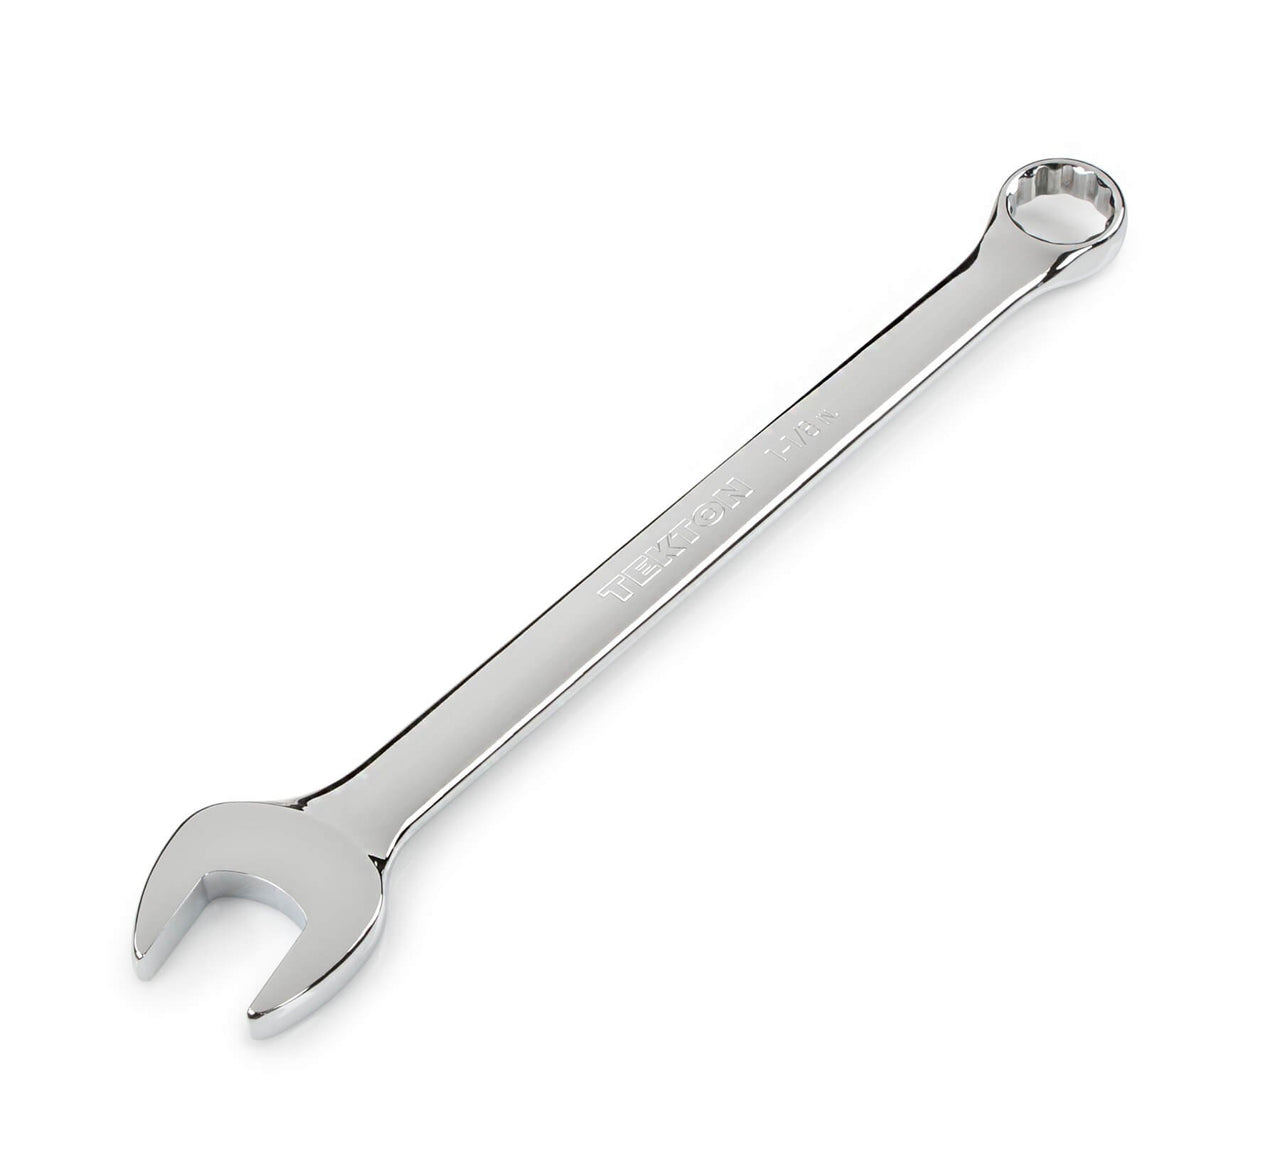 TEKTON 18268 Polished Combination Wrench, 1-1/8-Inch